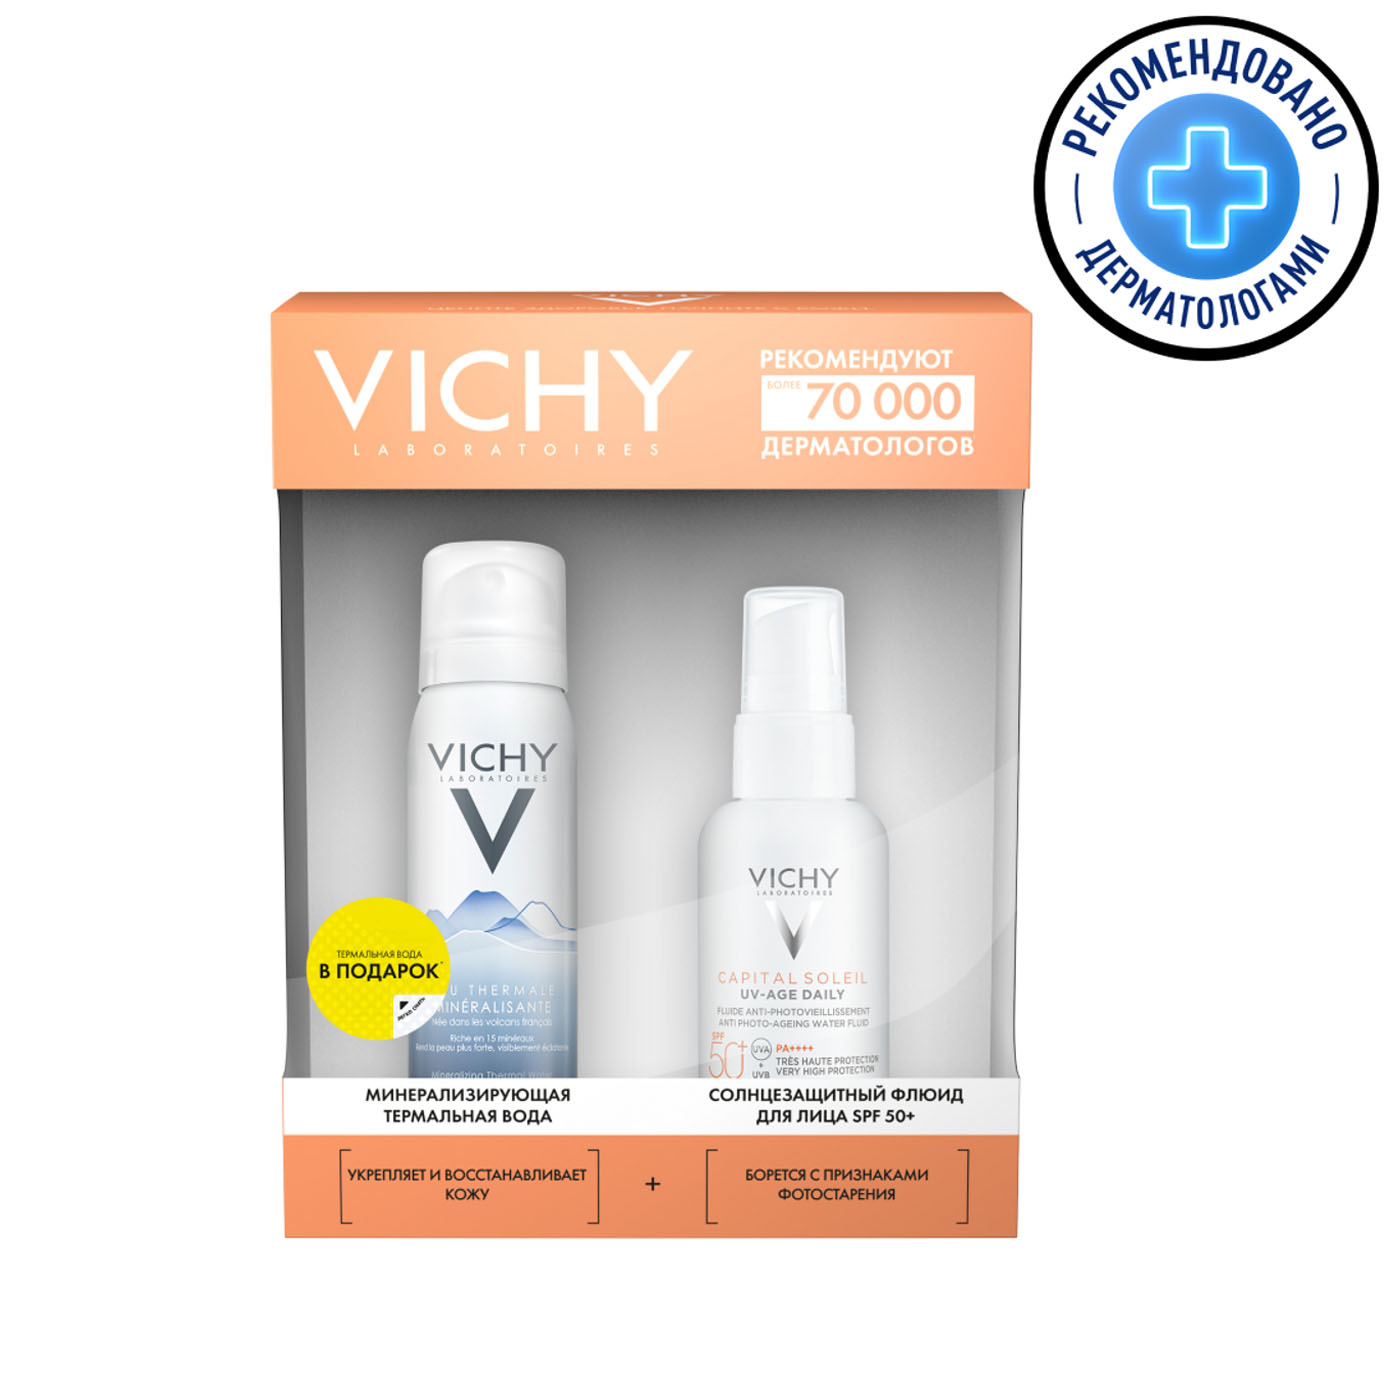 Vichy Подарочный набор: солнцезащитный флюид SPF50+ 40 мл + термальная вода 50 мл (Vichy, Capital Soleil) vichy tinted daily care capital soleil spf 50 1 7 fl oz 50 ml